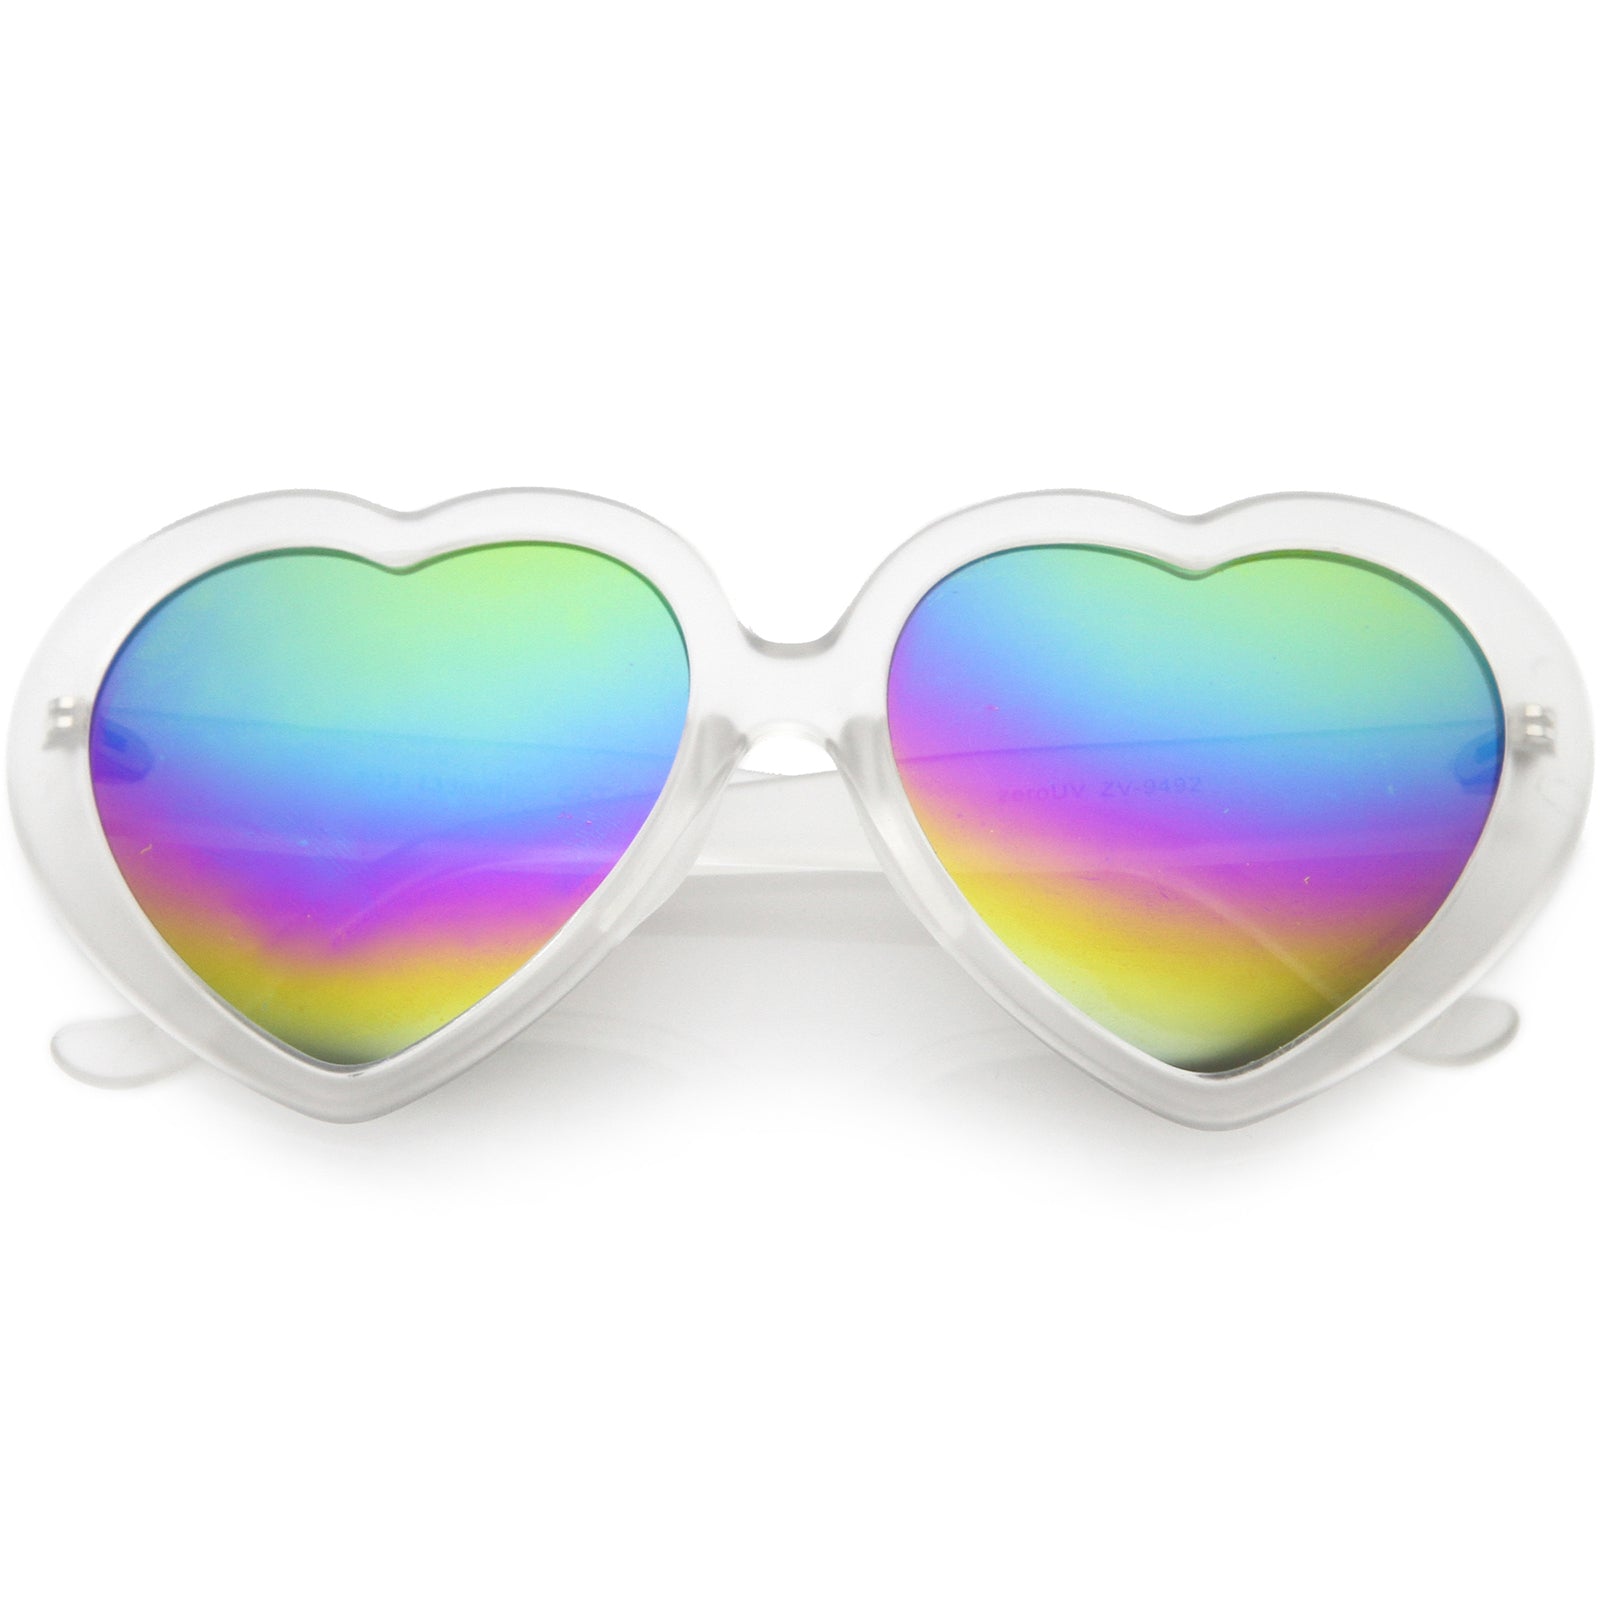 heart shaped sunglasses mirror